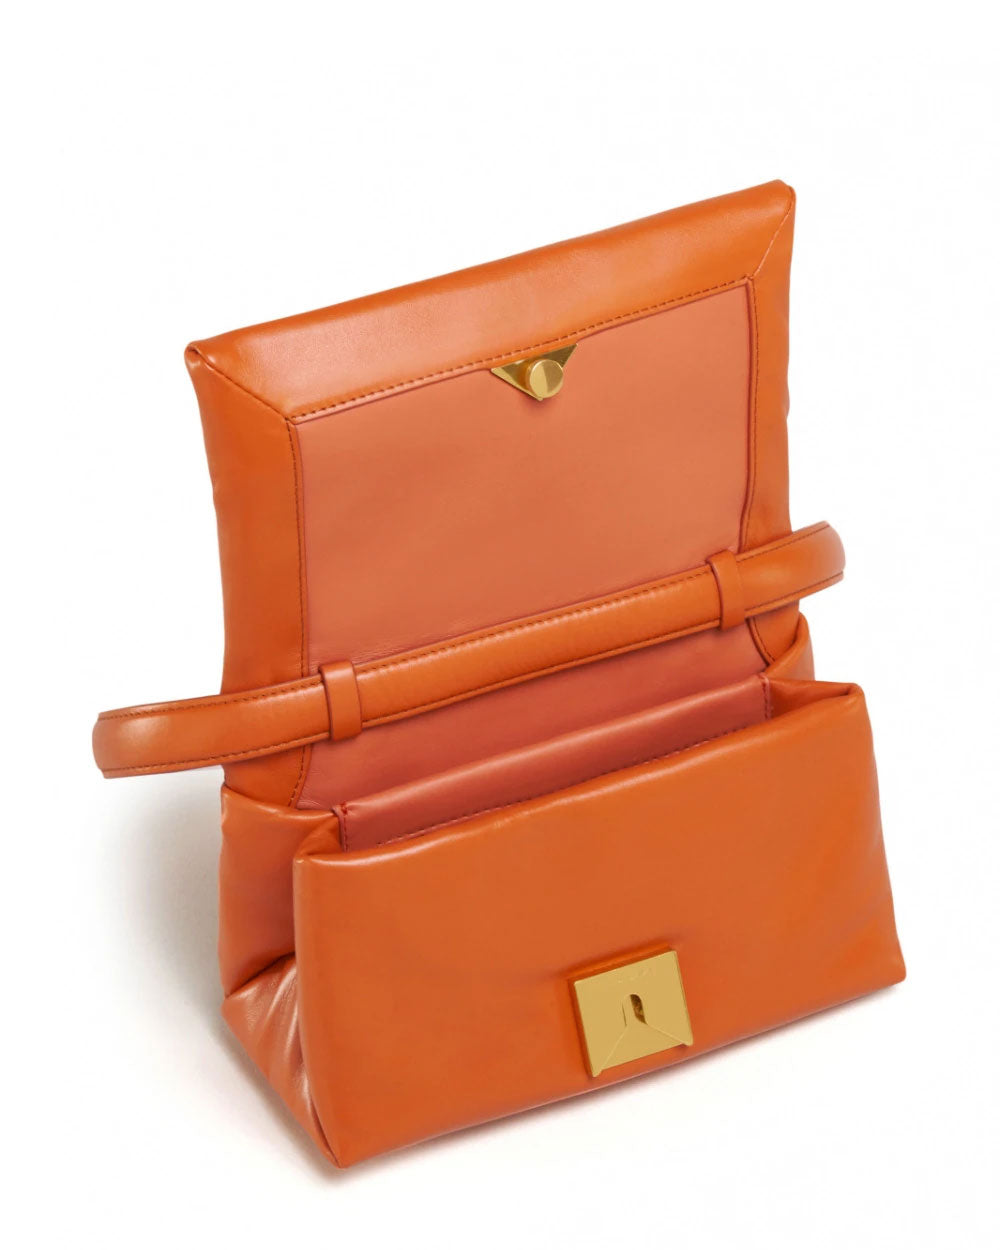 Prisma Small Leather Crossbody Bag in Sunset Orange